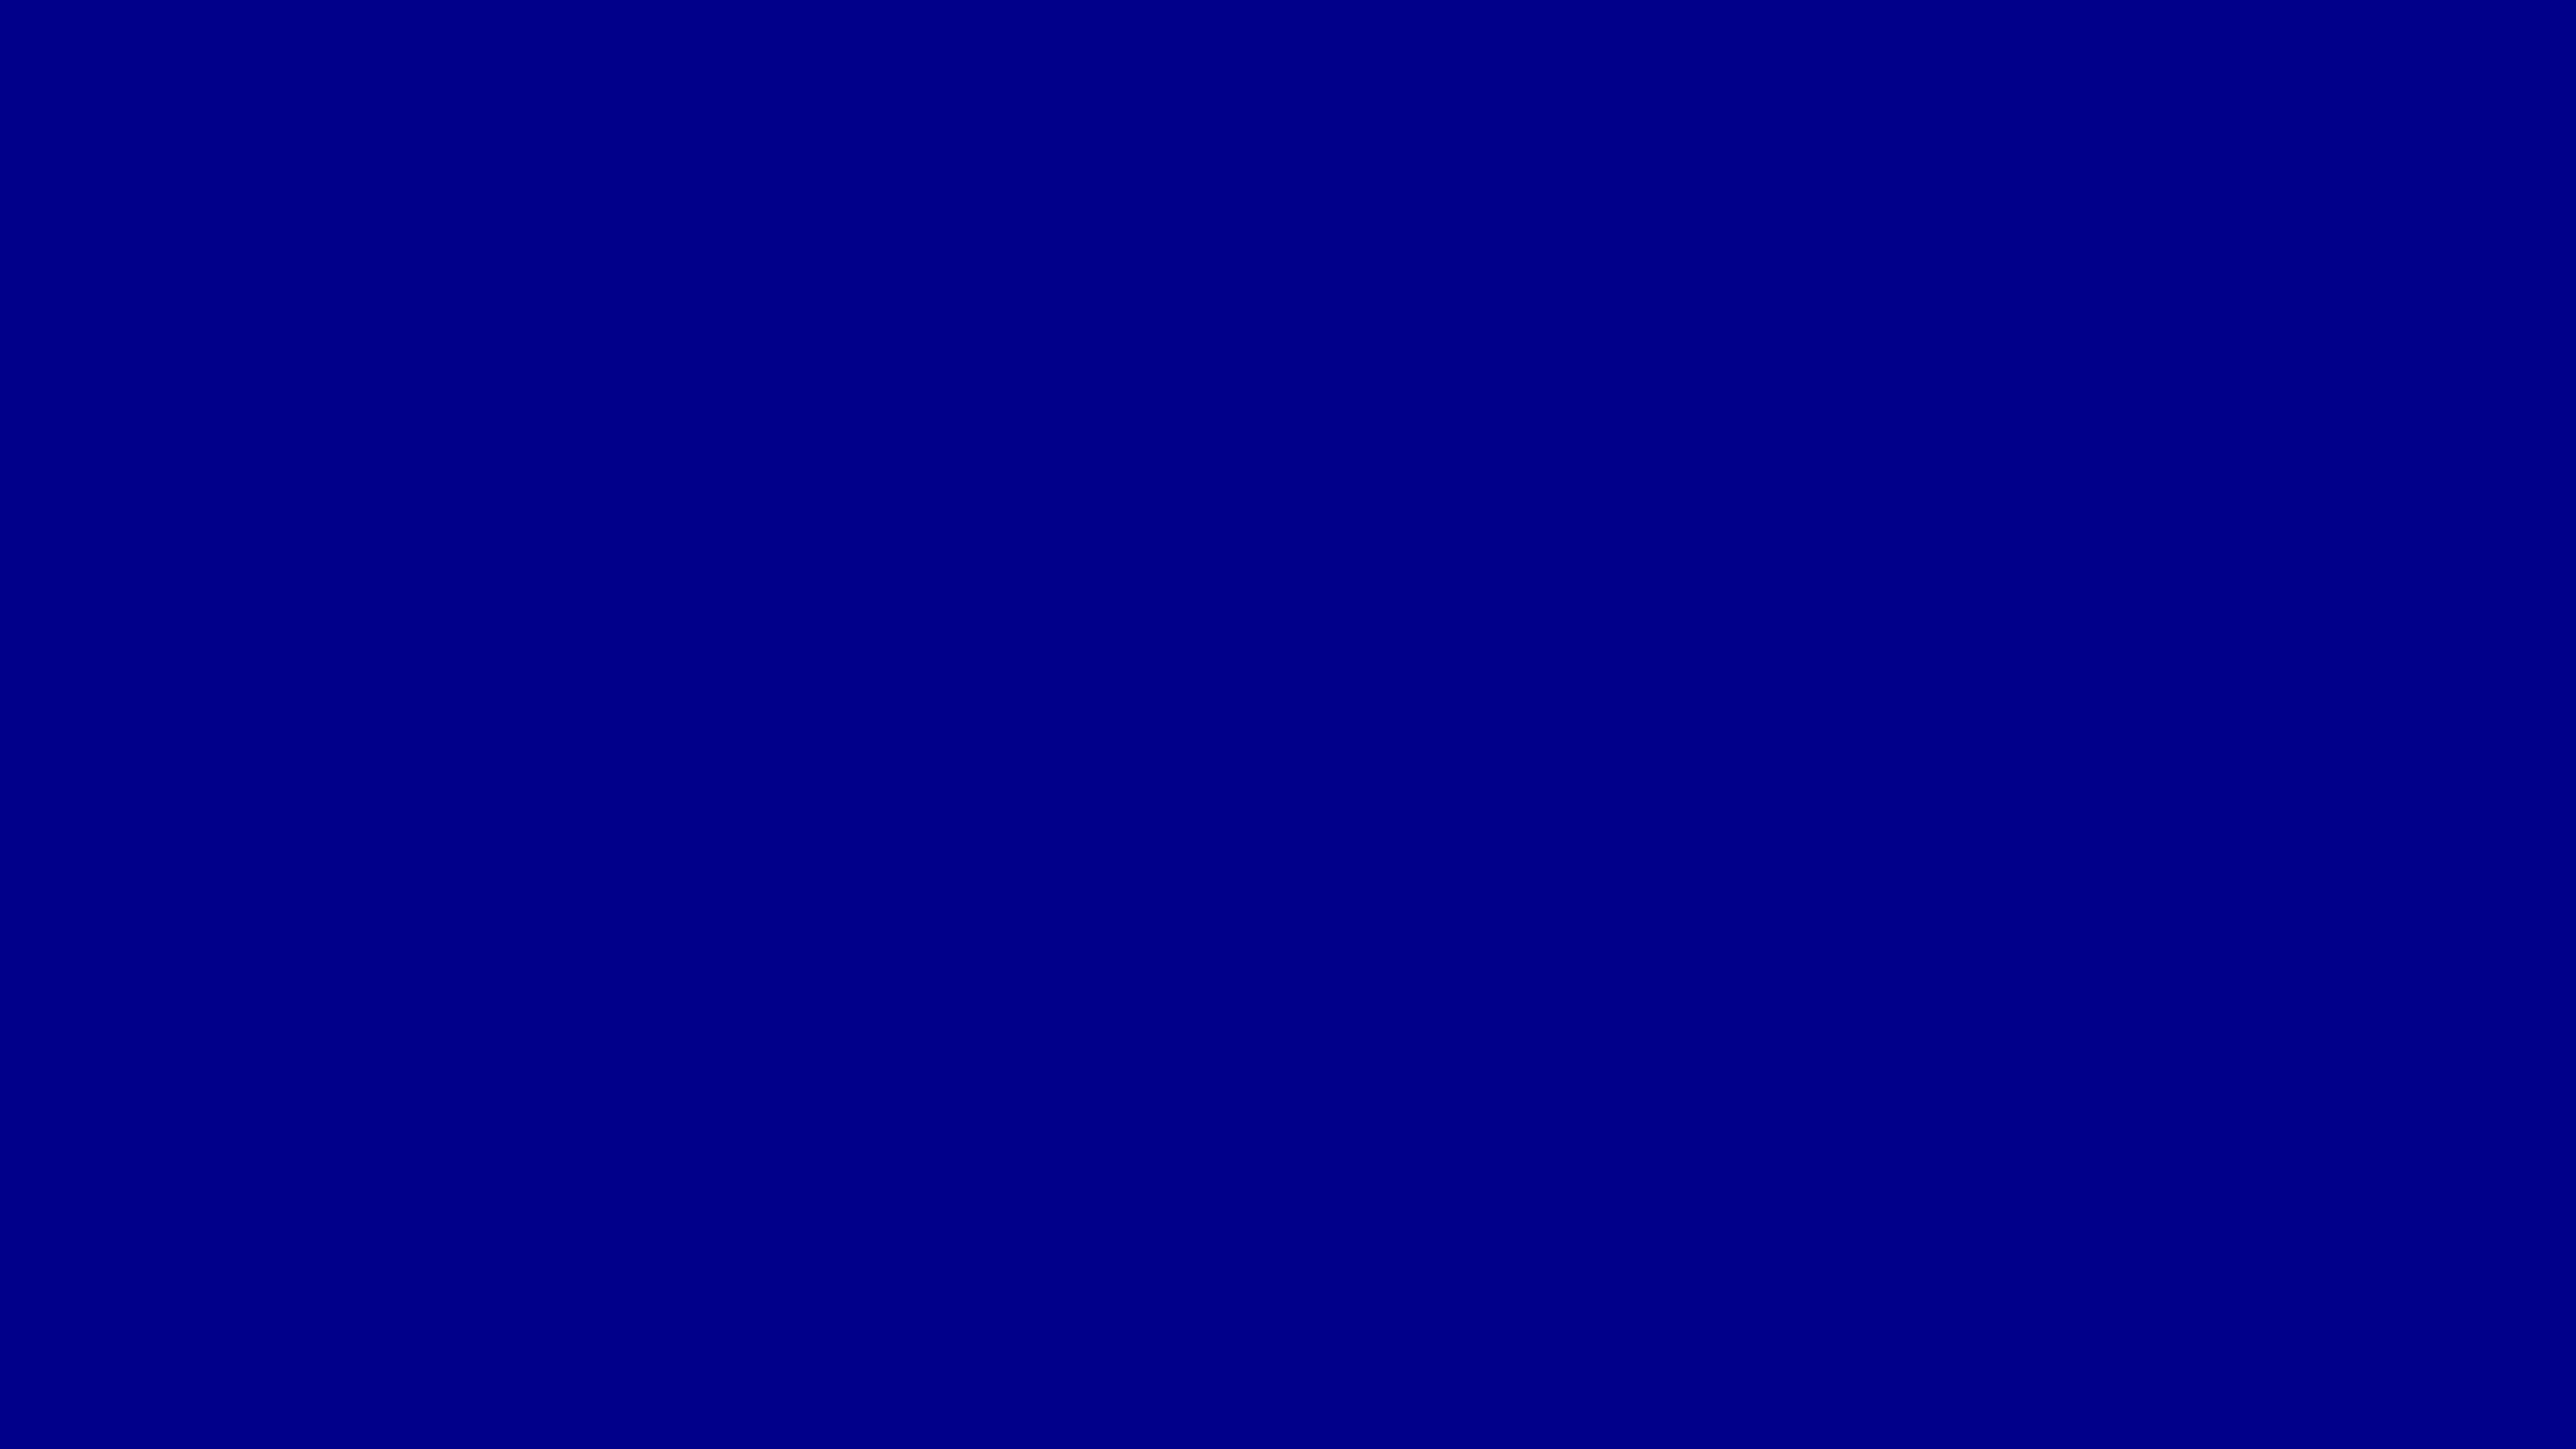 5120x2880-dark-blue-solid-color-background.jpg